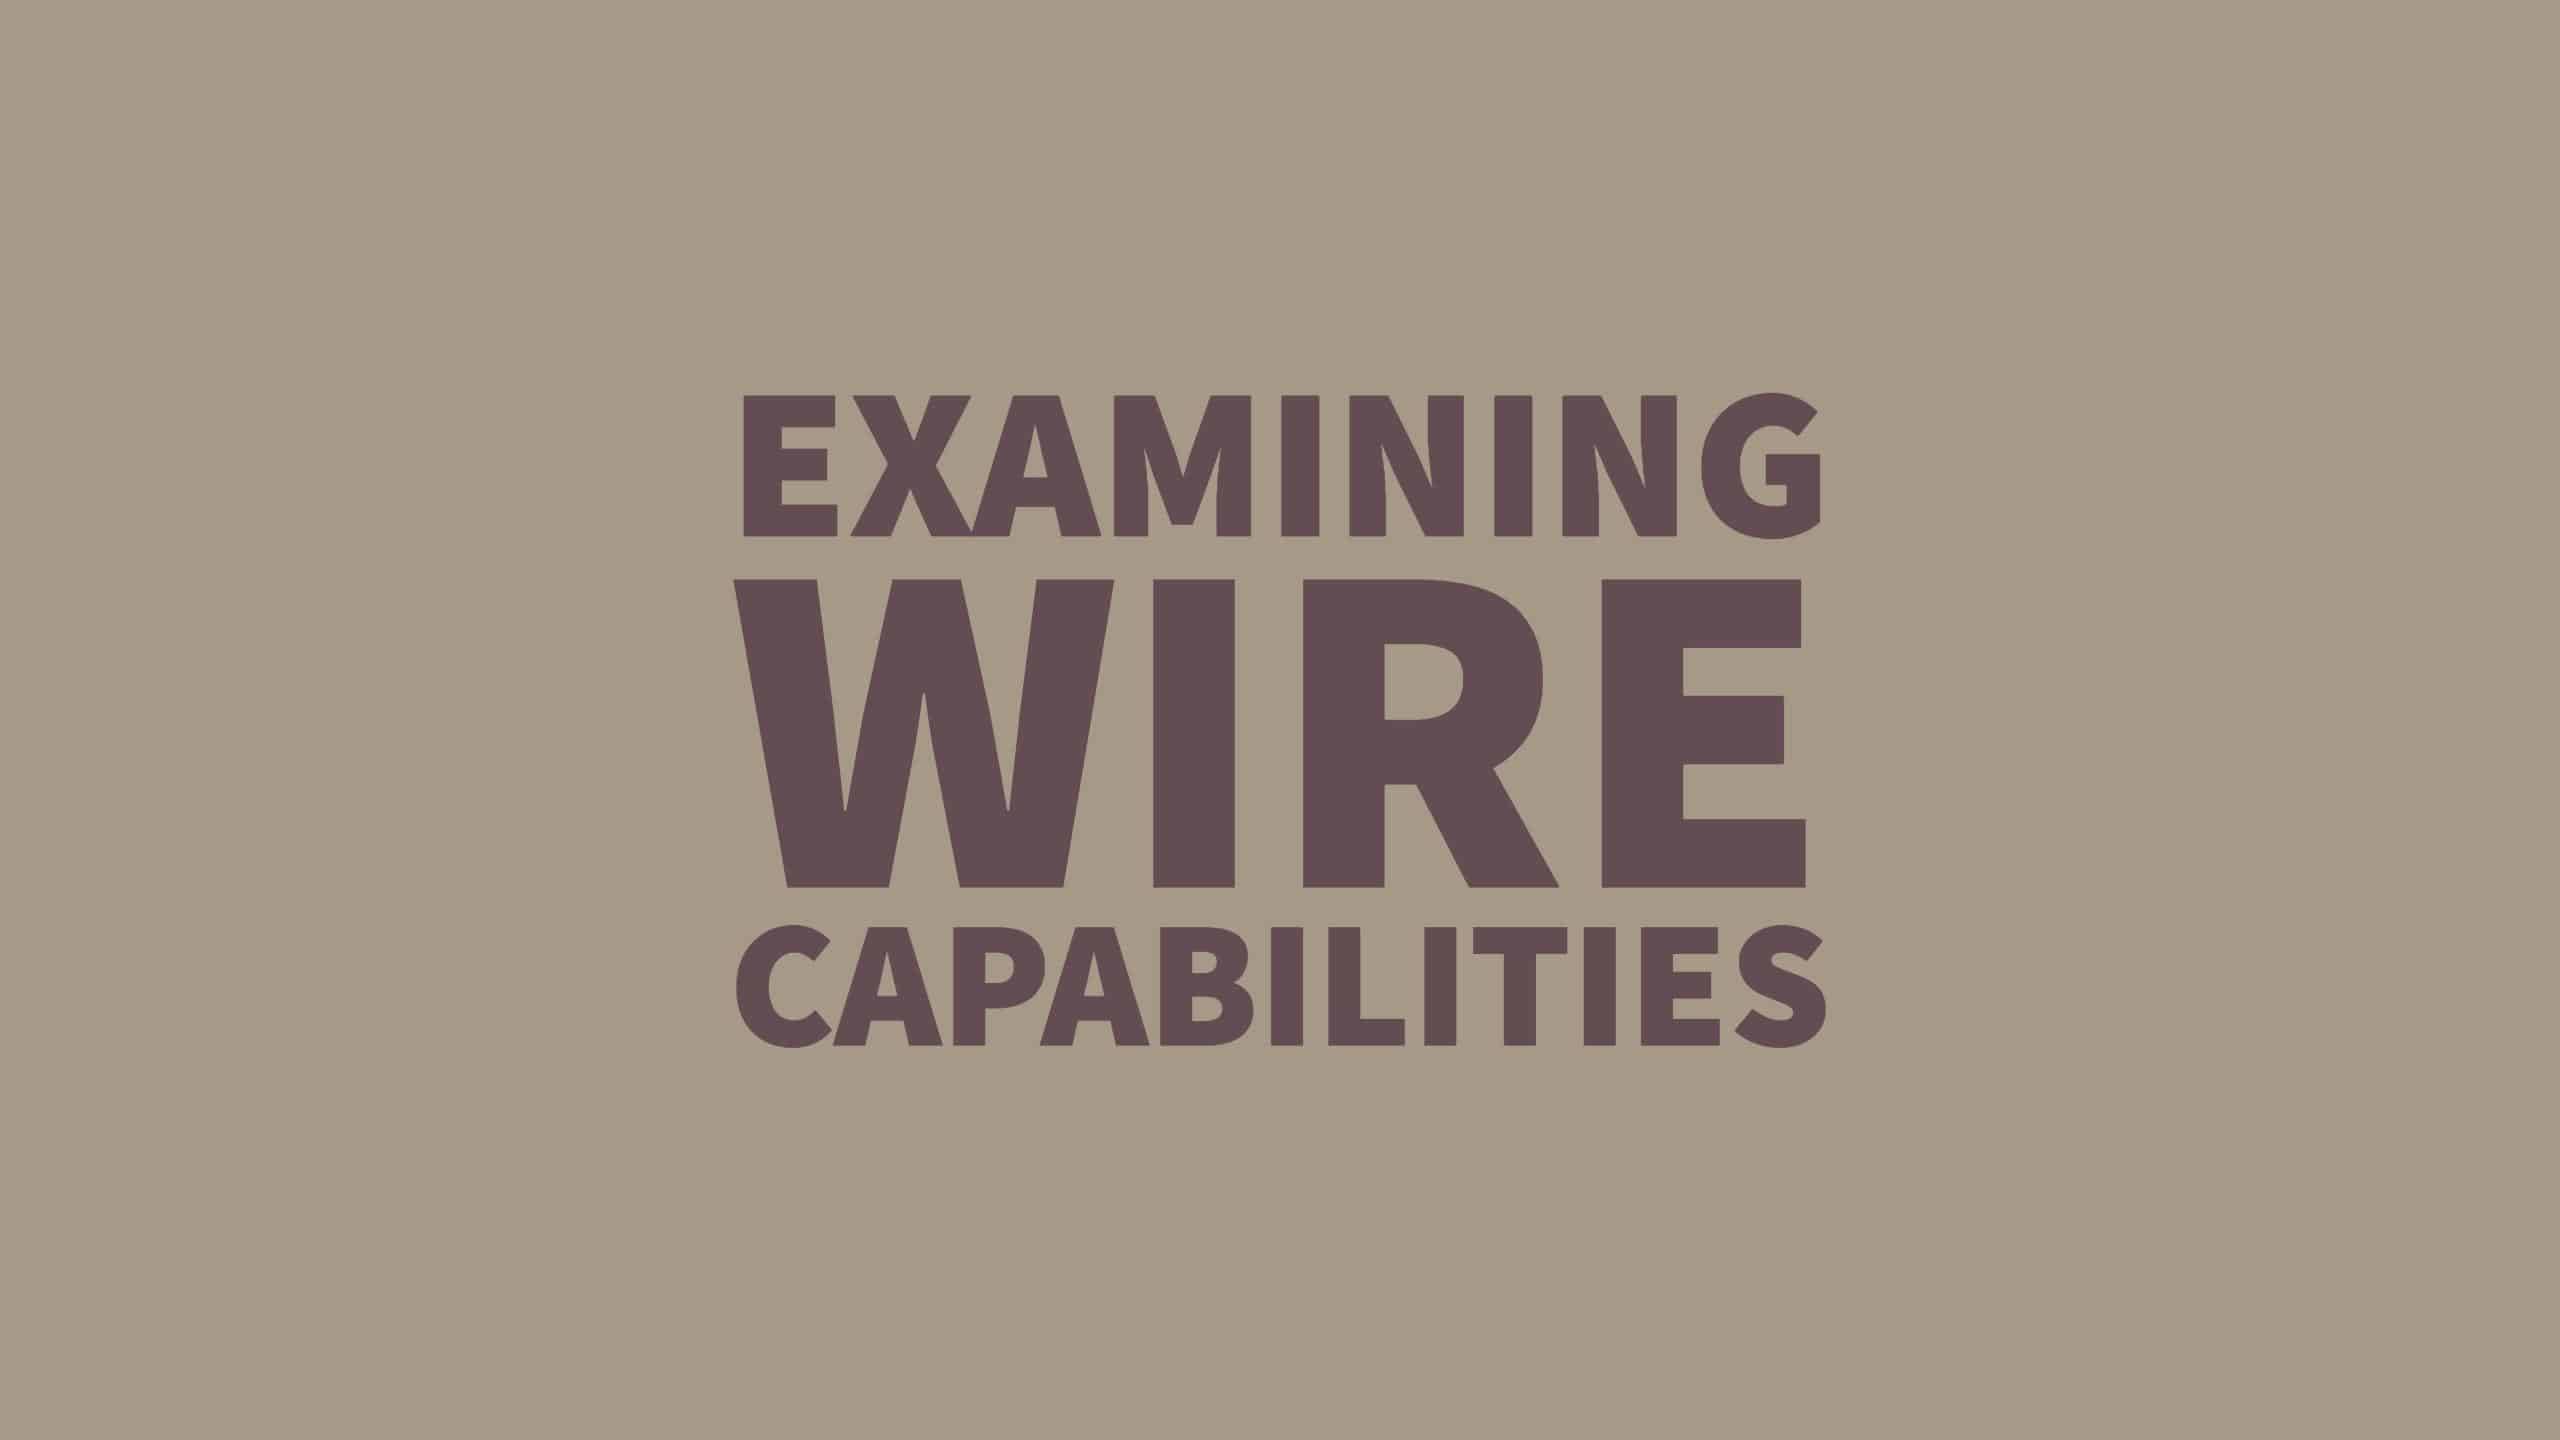 Examining wire capabilities graphic